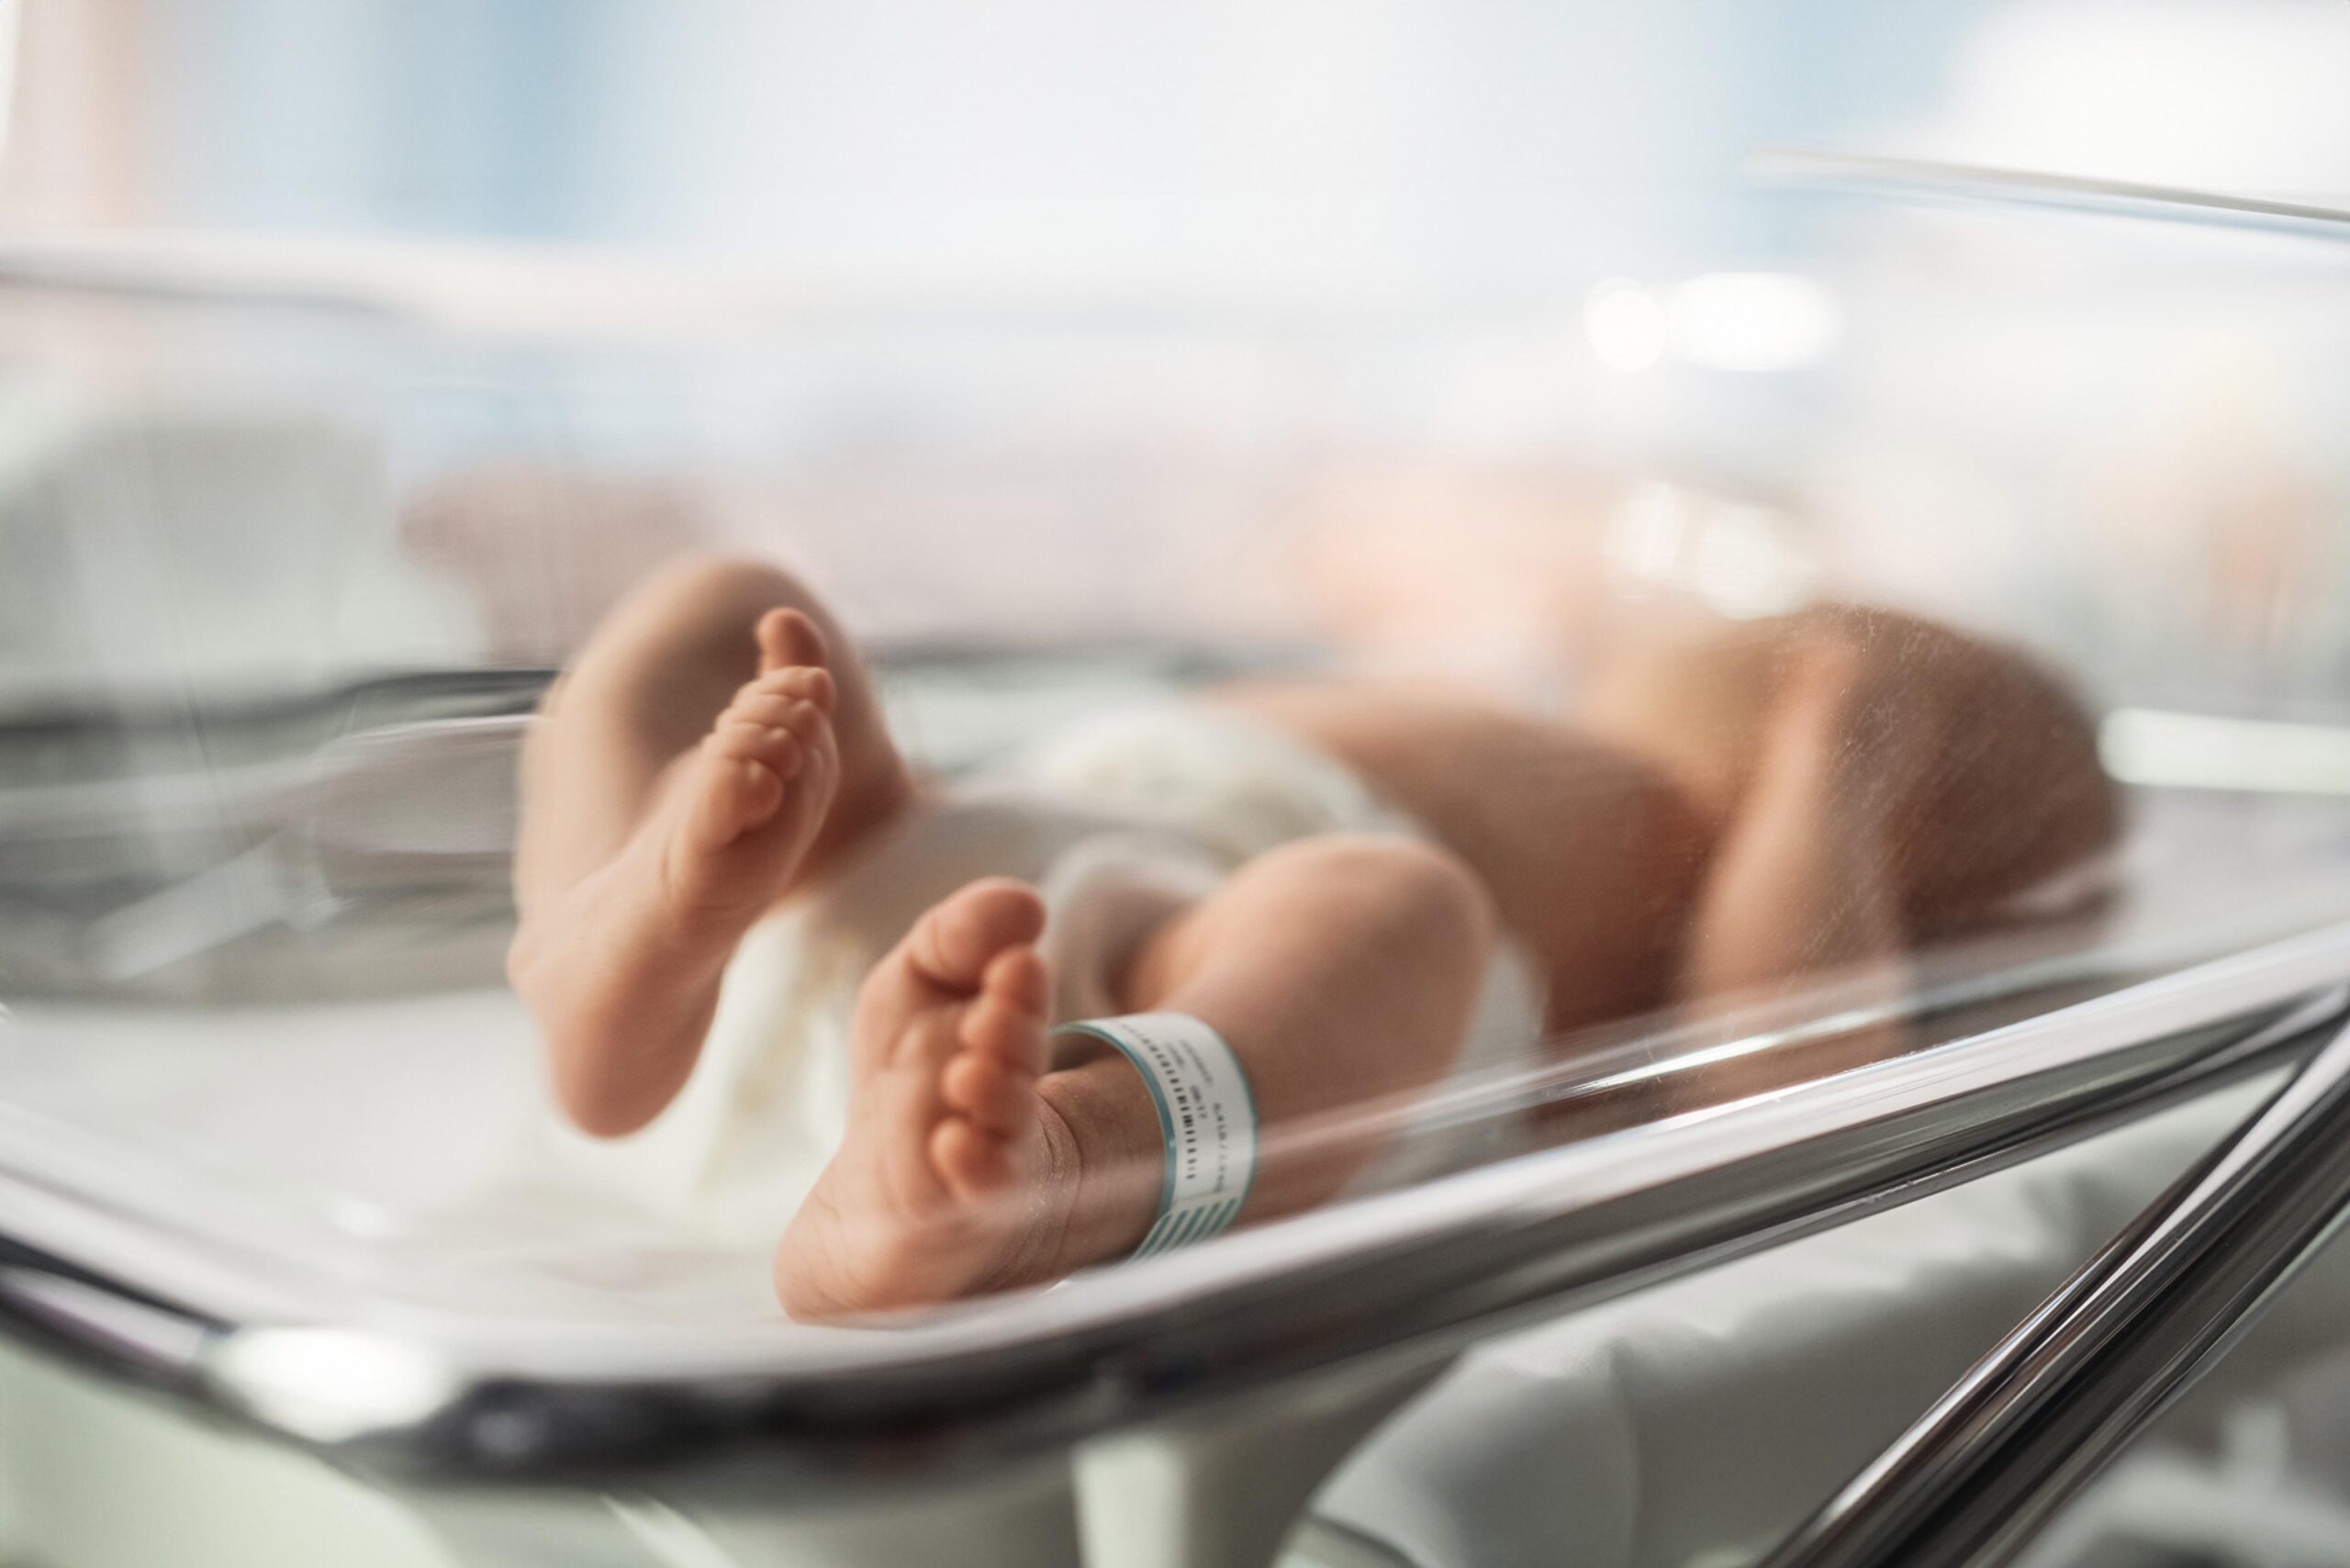 A newborn baby lying in an incubator in a hospital room.